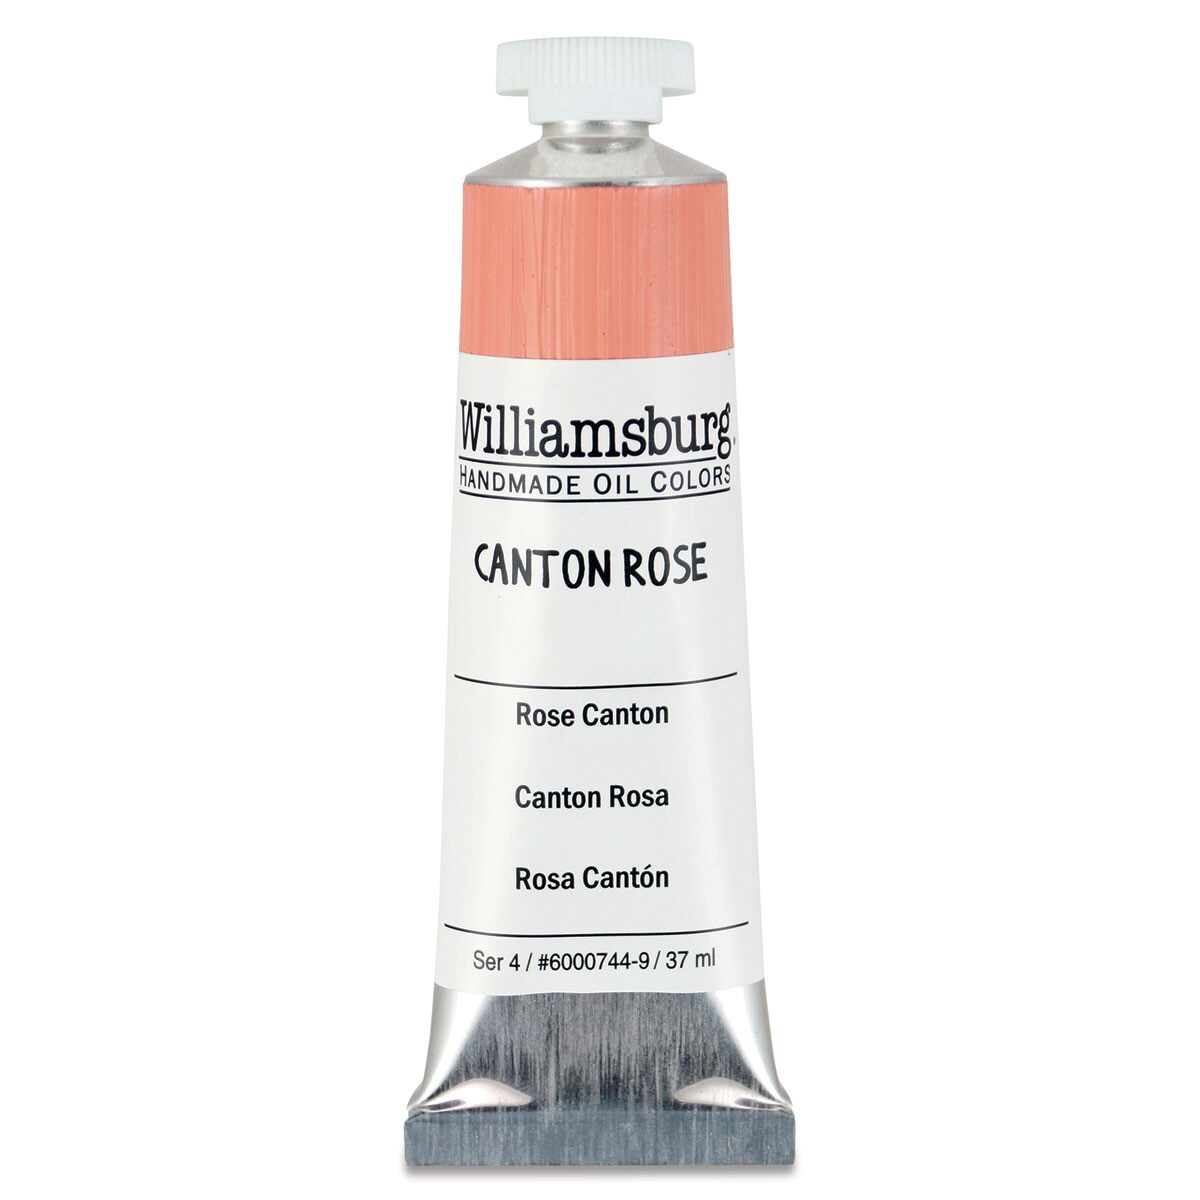 Williamsburg Handmade Oil Paint - Canton Rose, 37 ml tube